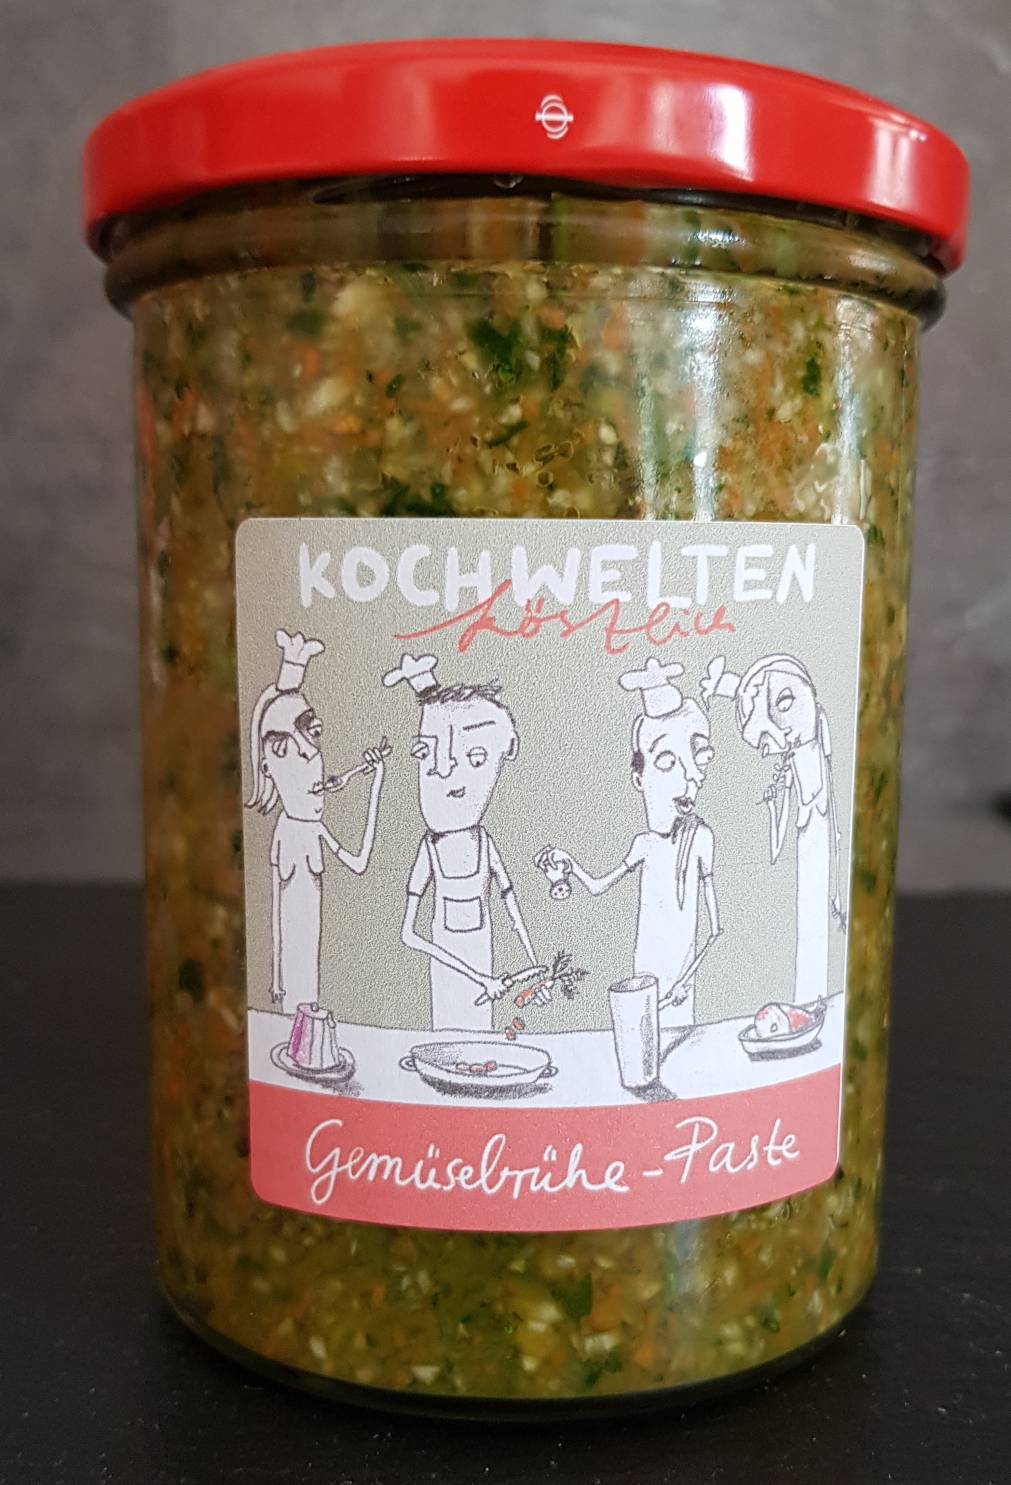 Kochschule Sonja Lenz Stuttgart Kochwelten Köstlich Gemüsebrühe-Paste